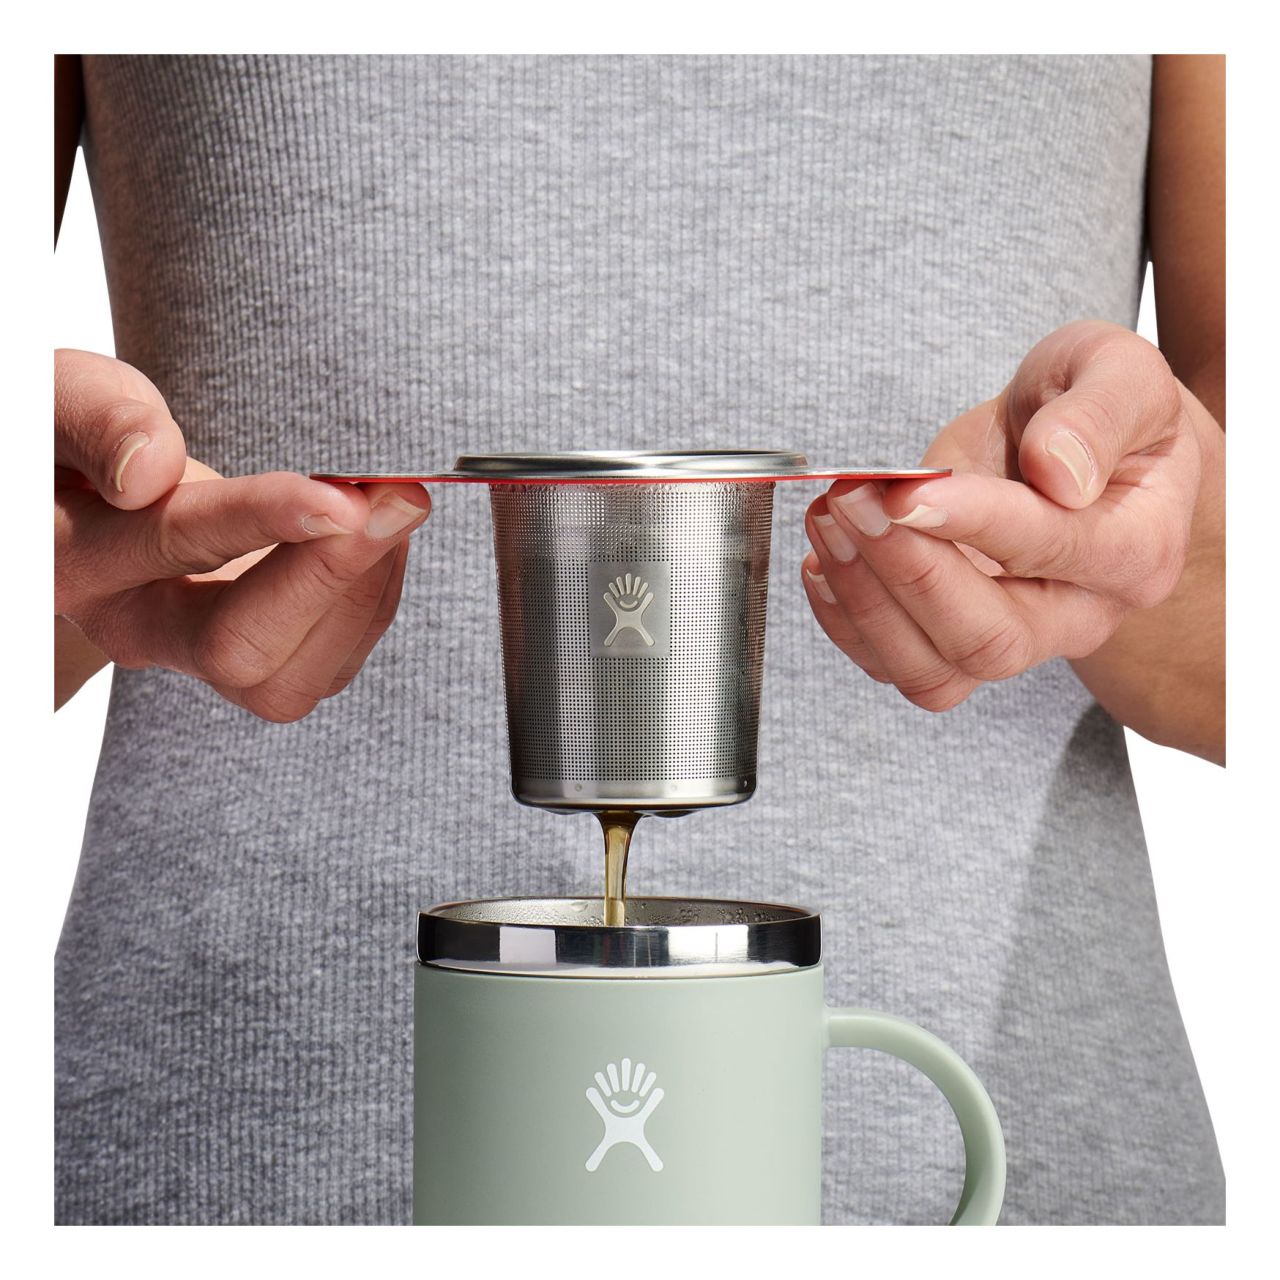 Hydro Flask Coffee Mug Coffee & Tea Accessories